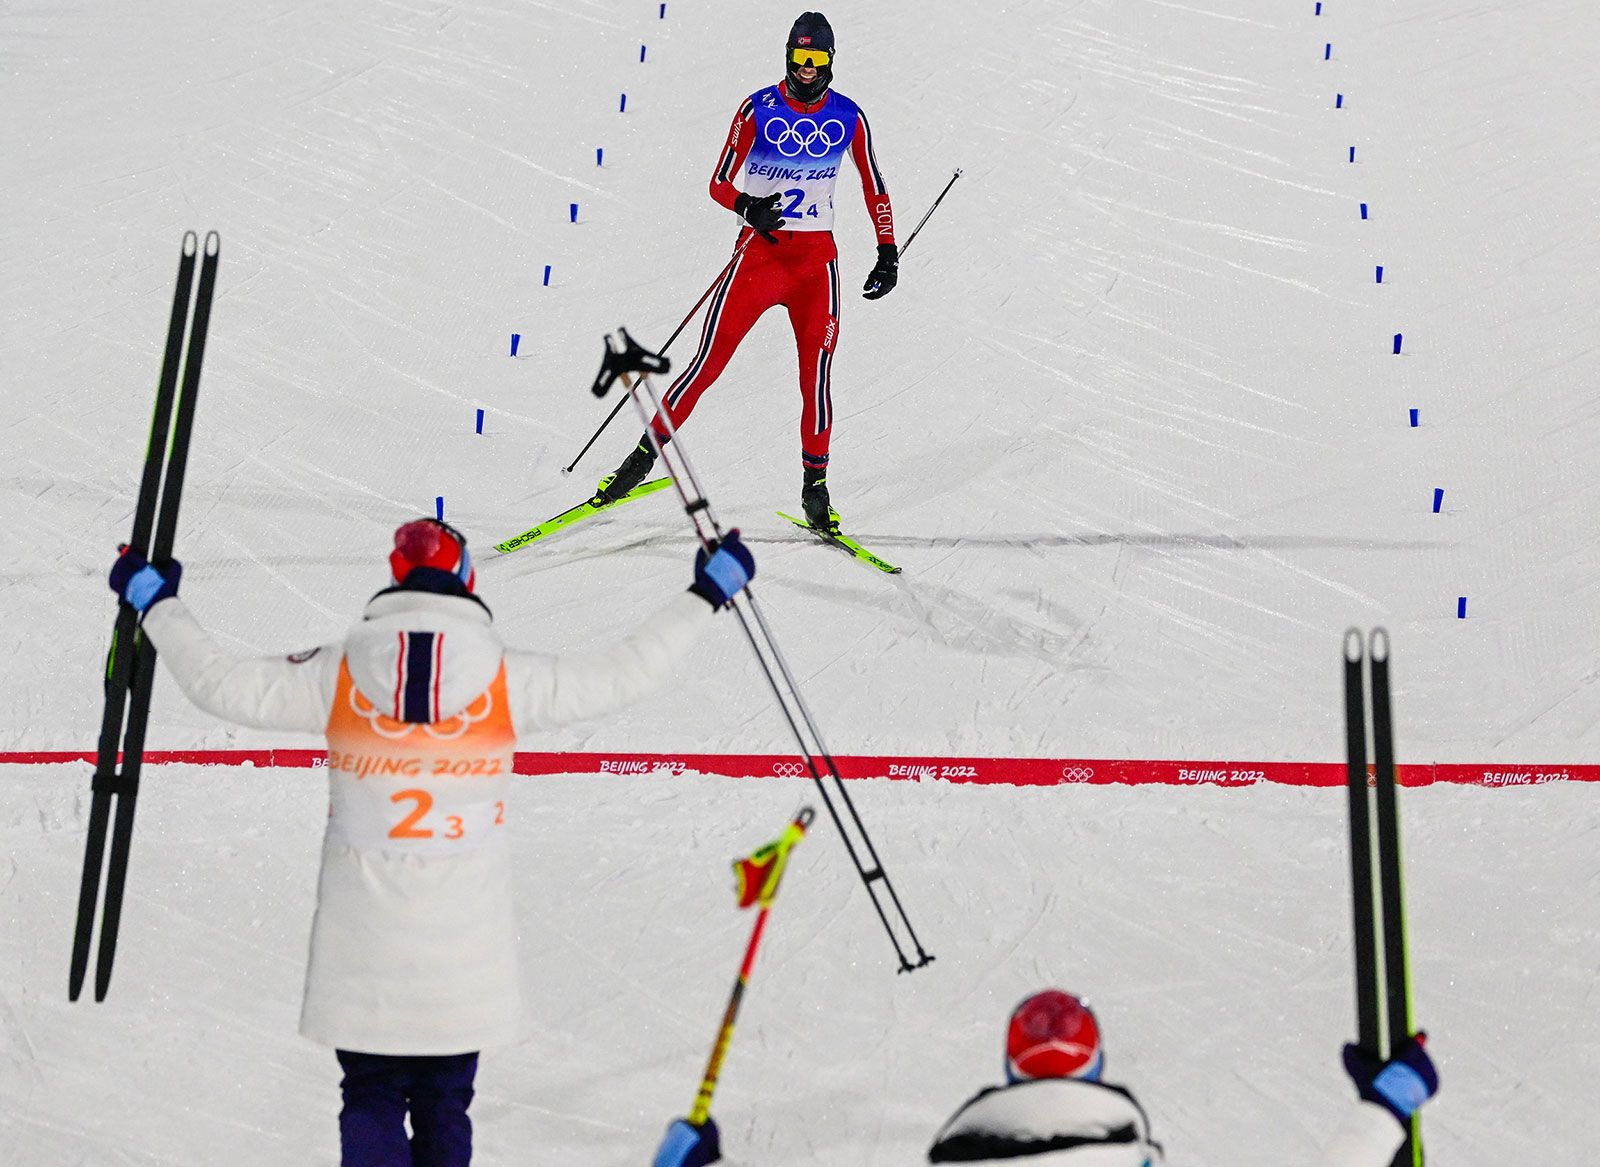 Beijing Olympics: Wise eyes a three-peat, Gu eyes freestyle skiing